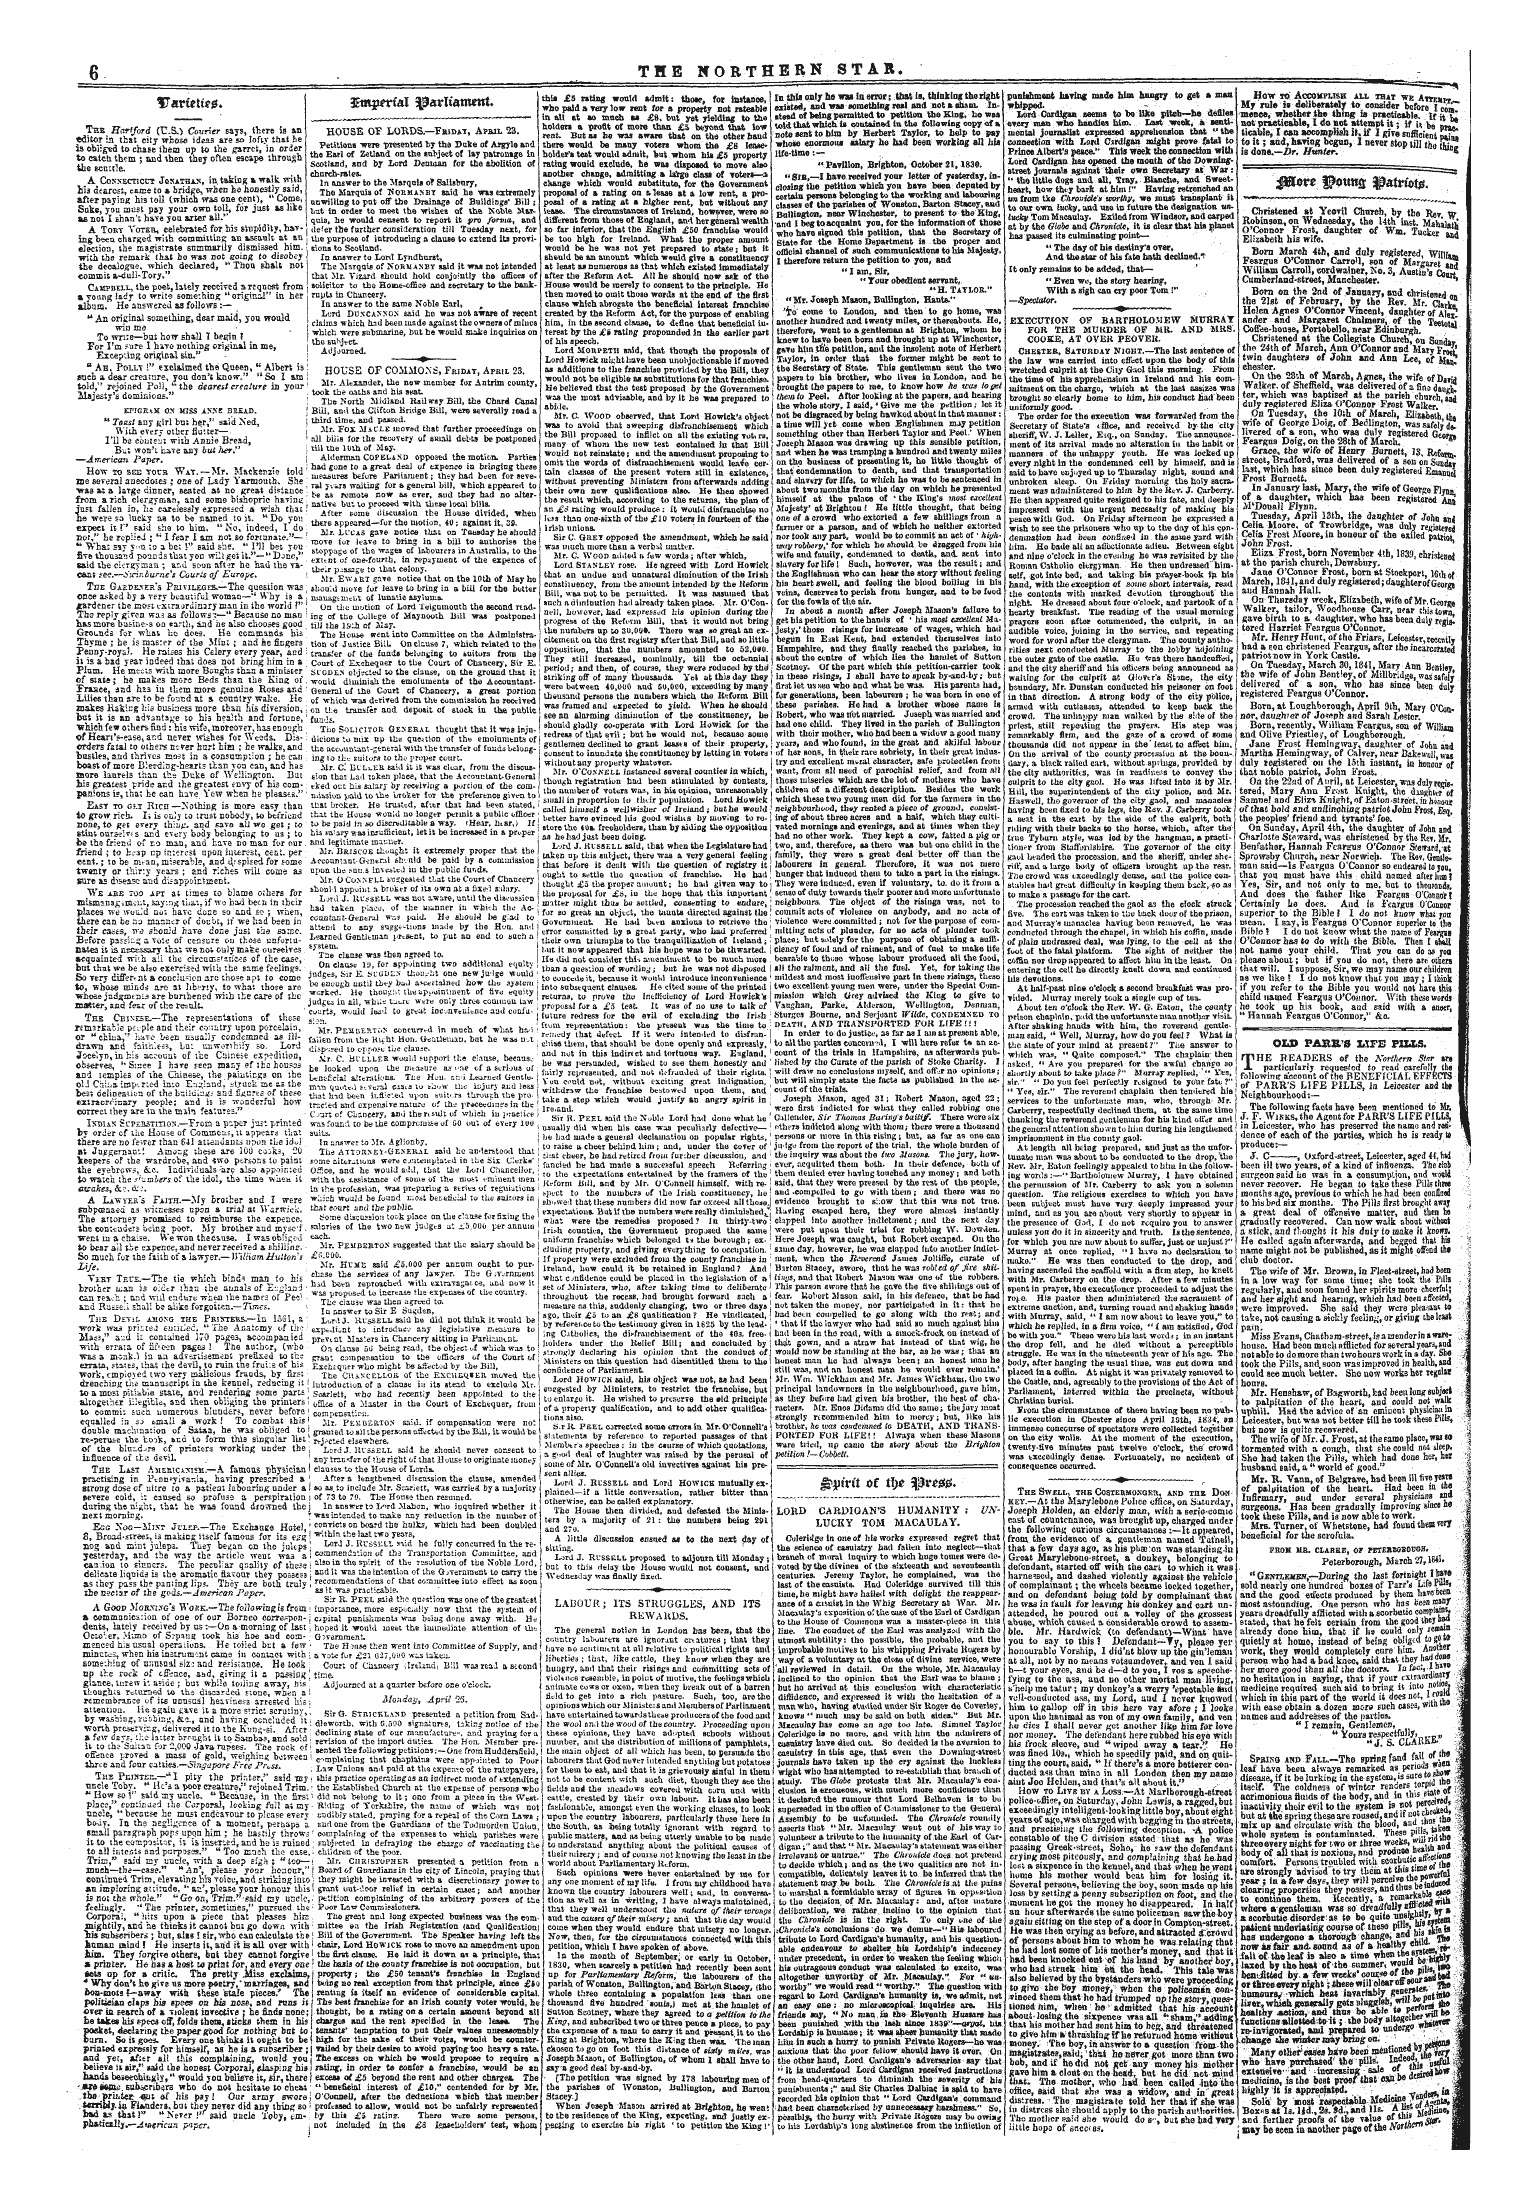 Northern Star (1837-1852): jS F Y, 3rd edition - Emsm'al Asarltameut